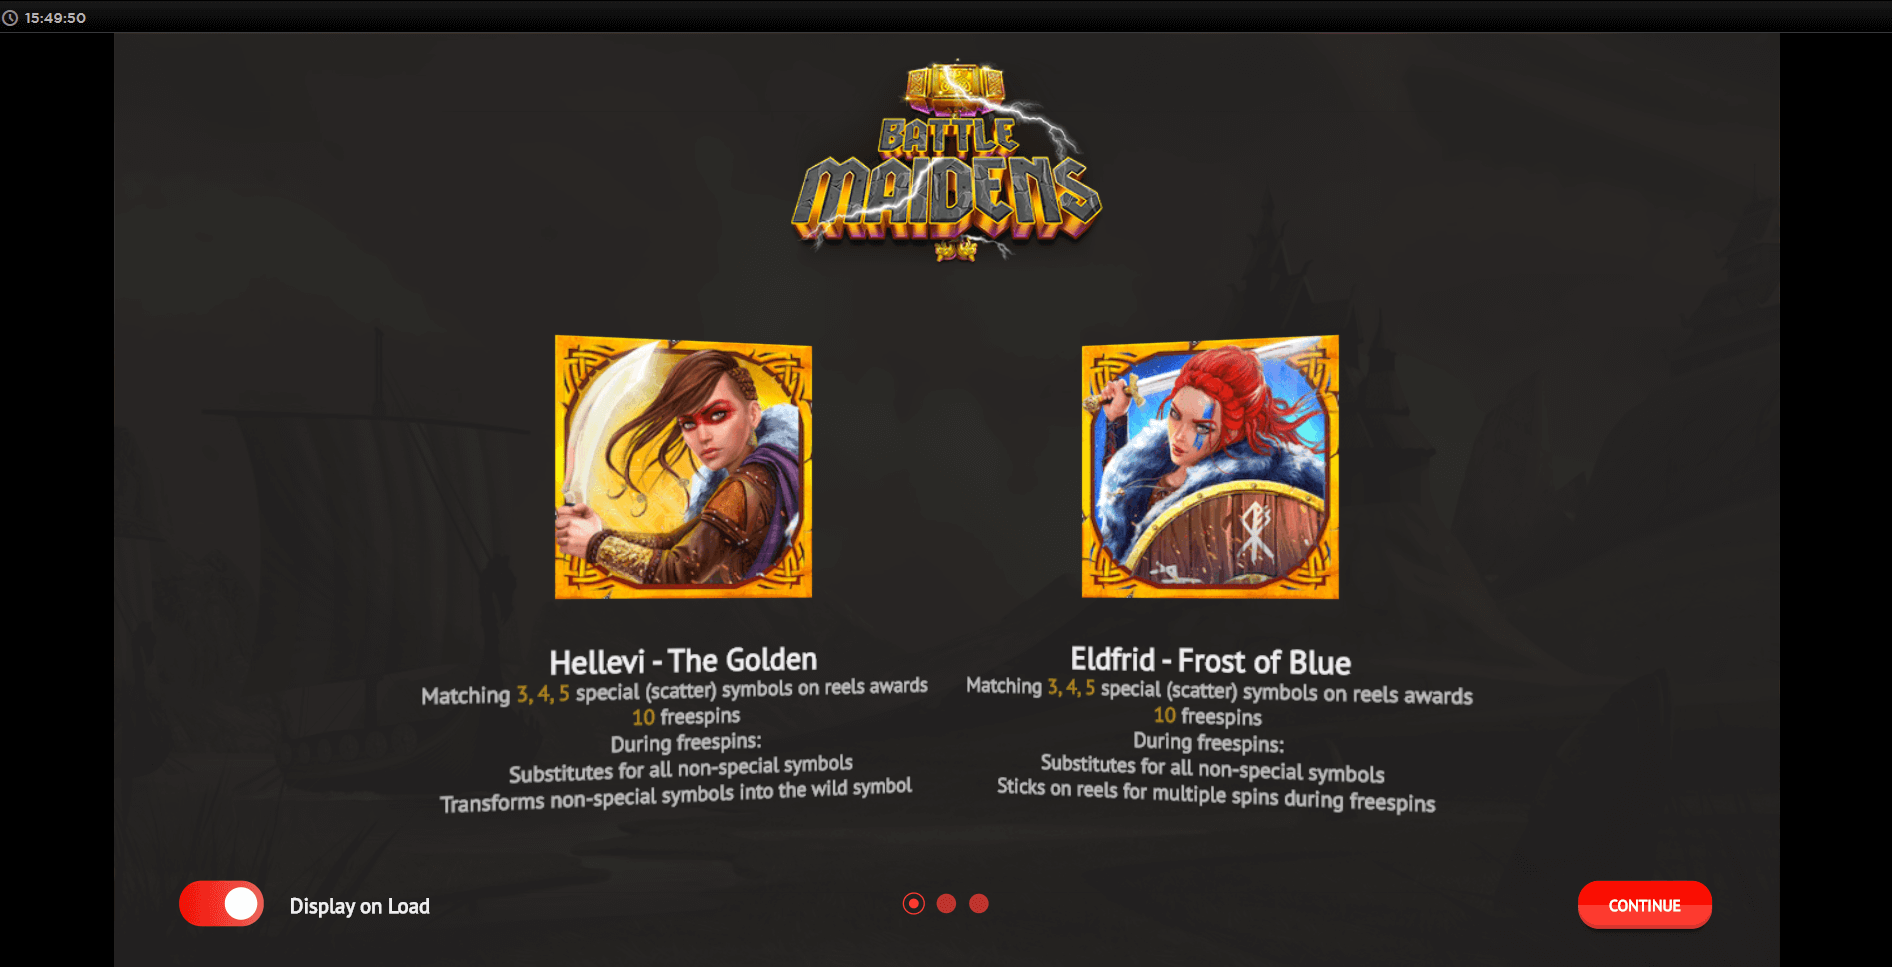 battle maidens slot machine detail image 0